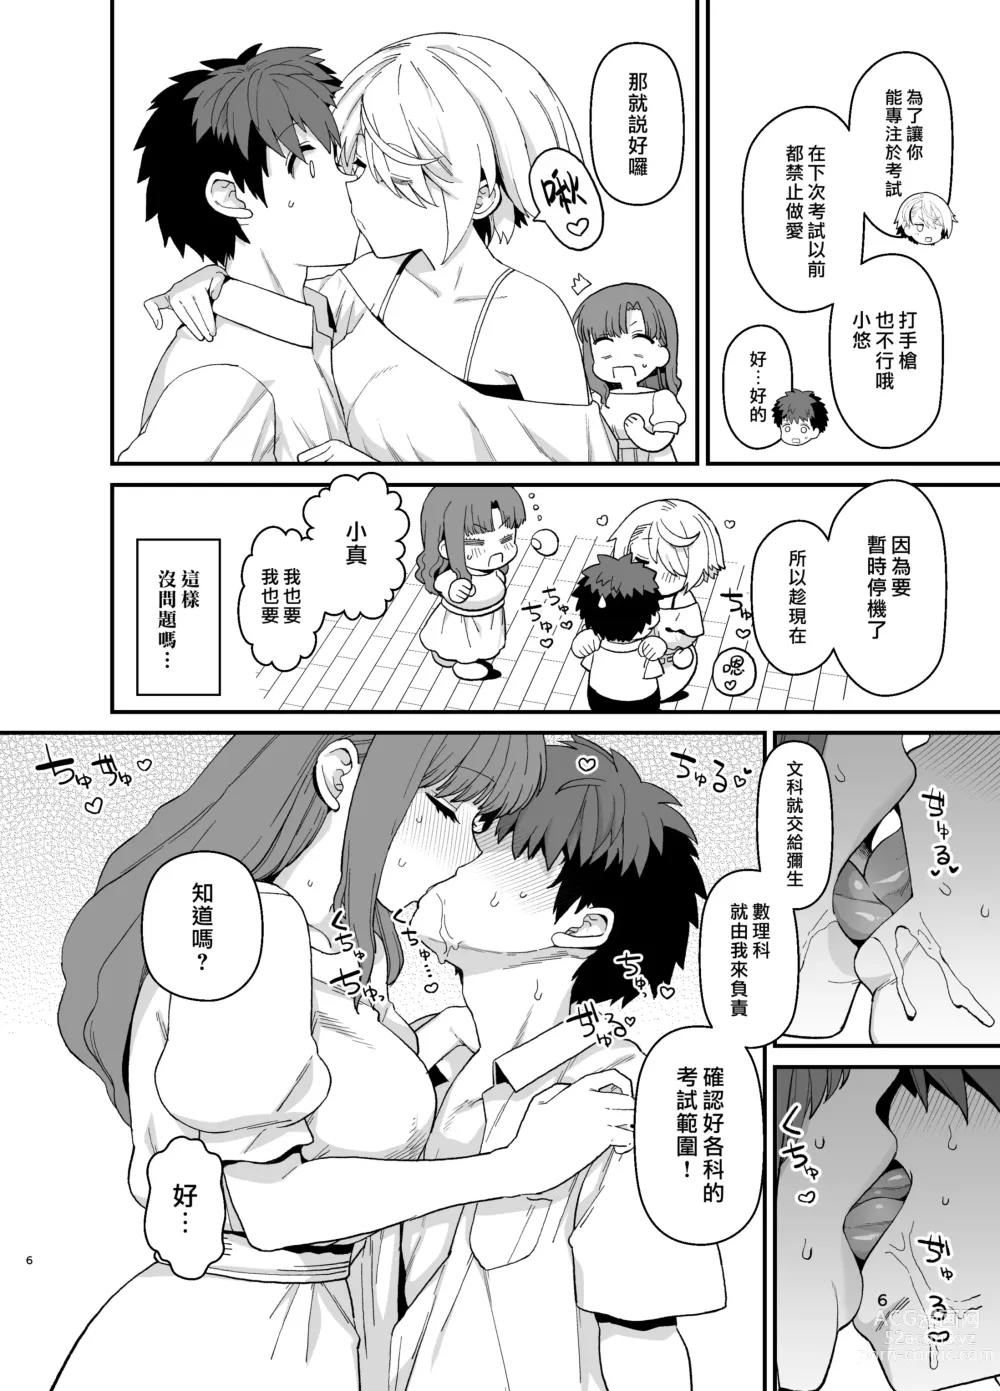 Page 8 of doujinshi Sentaku Kyouka Nijigenme